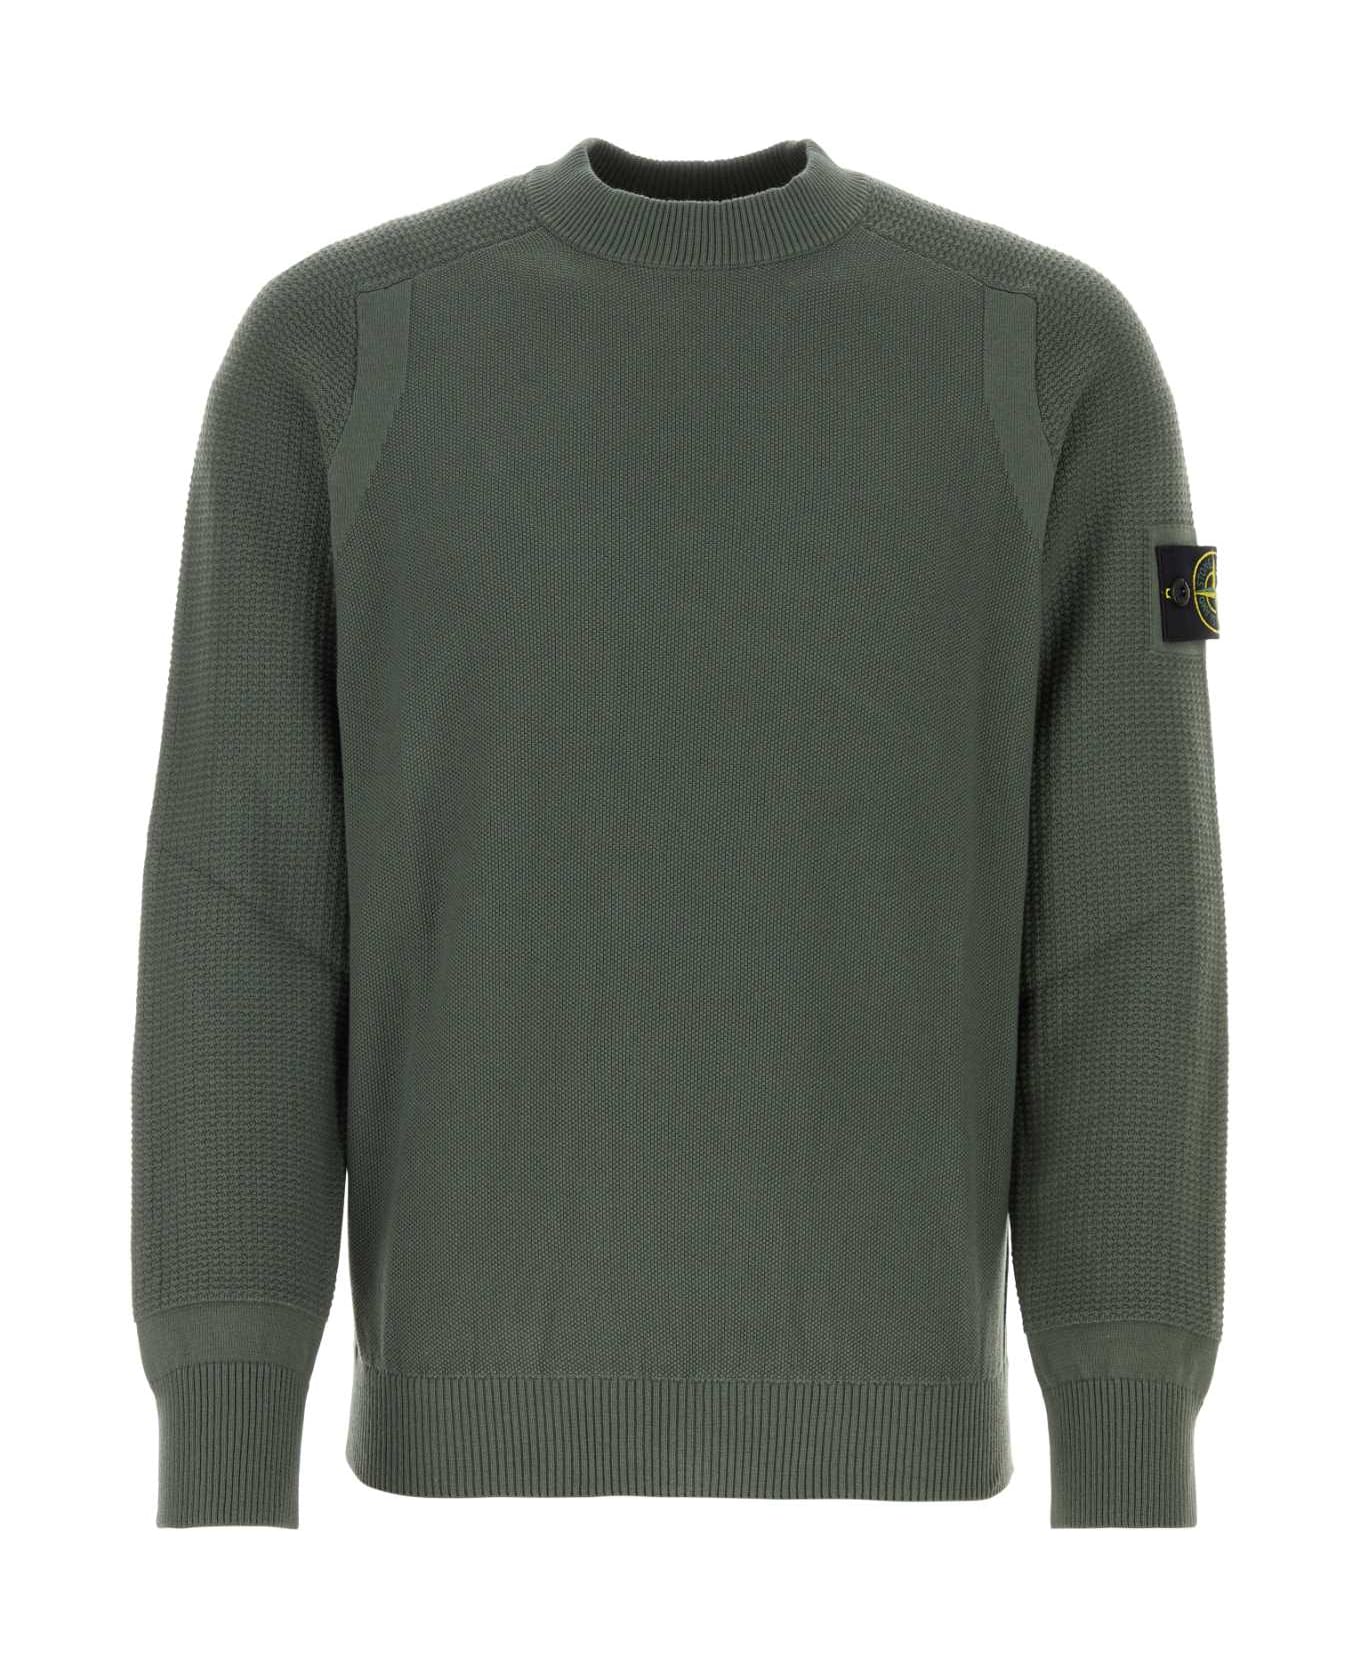 Stone Island Sage Green Cotton Sweater - MUSCHIO